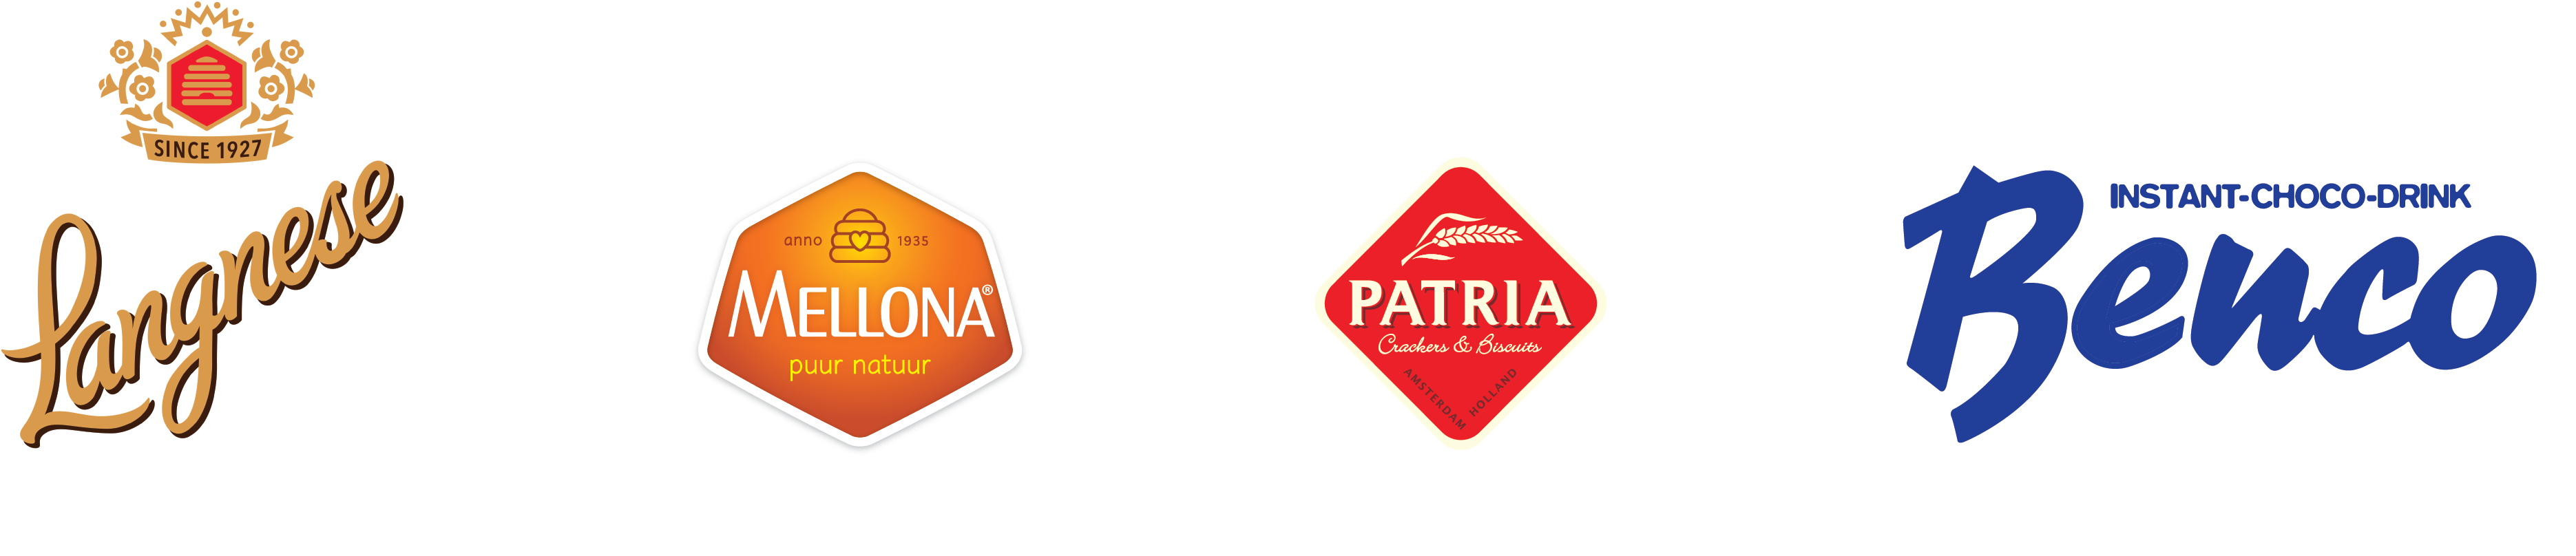 Ambtman Logo's: Langnese Honing, Mellona Honing, Patria Crackers & Biscuits, Benco Choco Drink